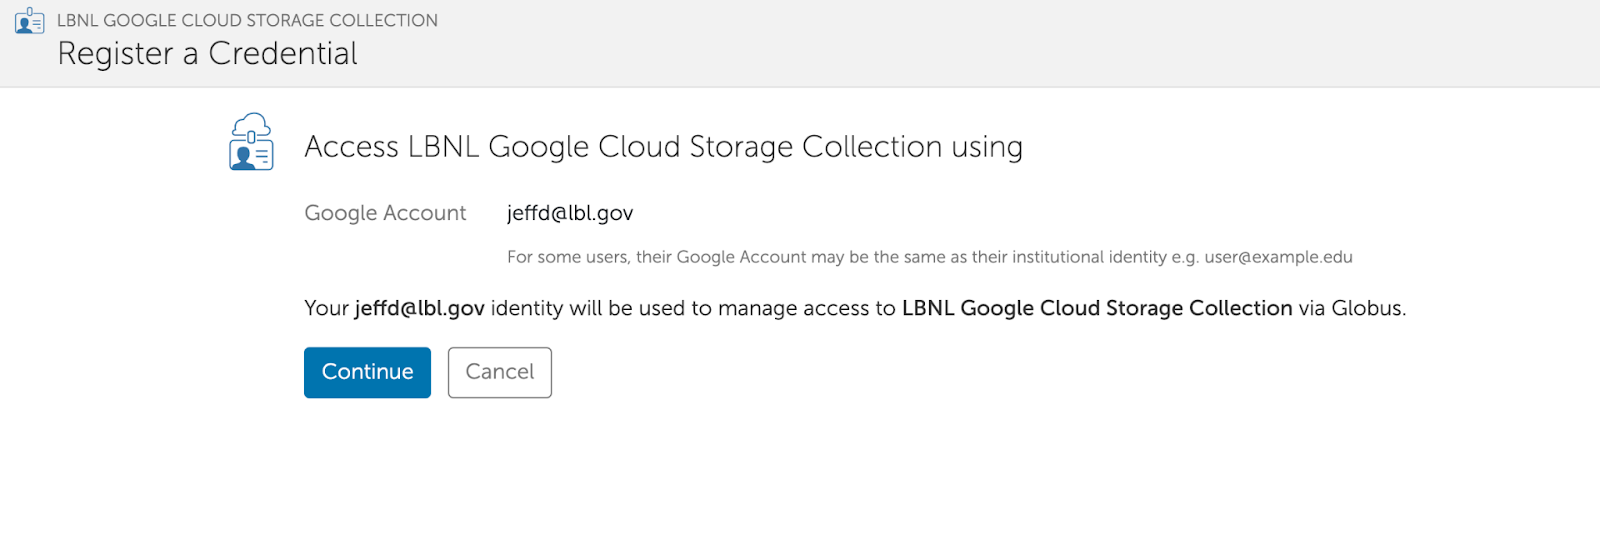 hastighed via hårdtarbejdende Using the Globus Google Cloud Storage Connector